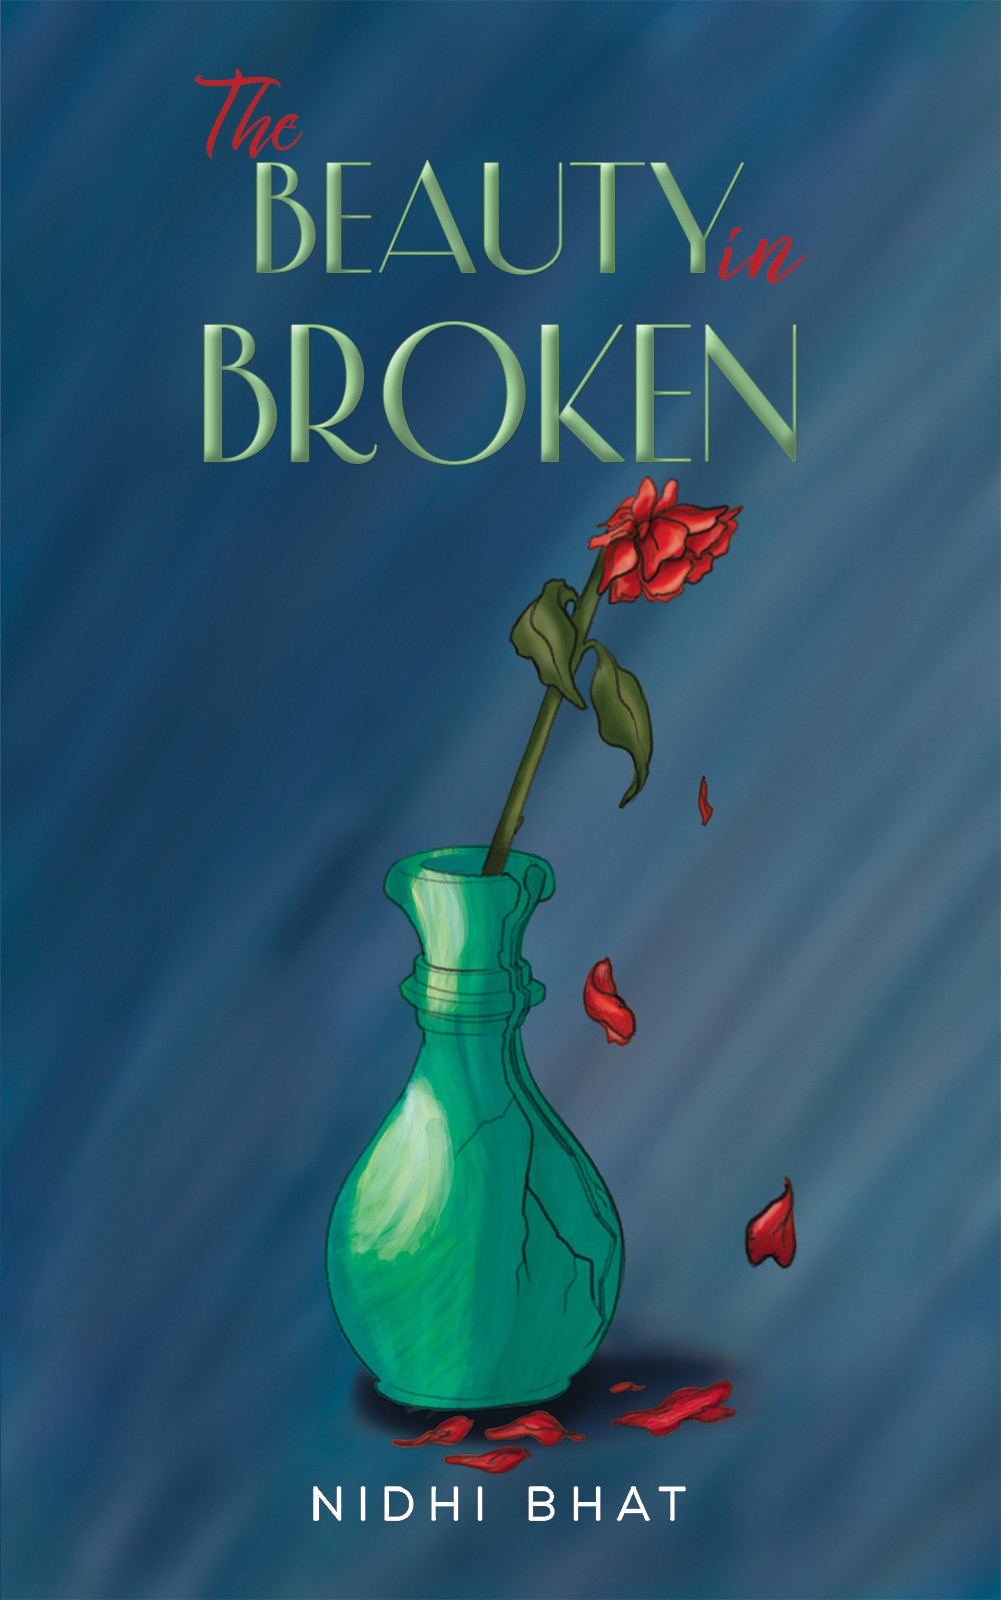 The Beauty in Broken